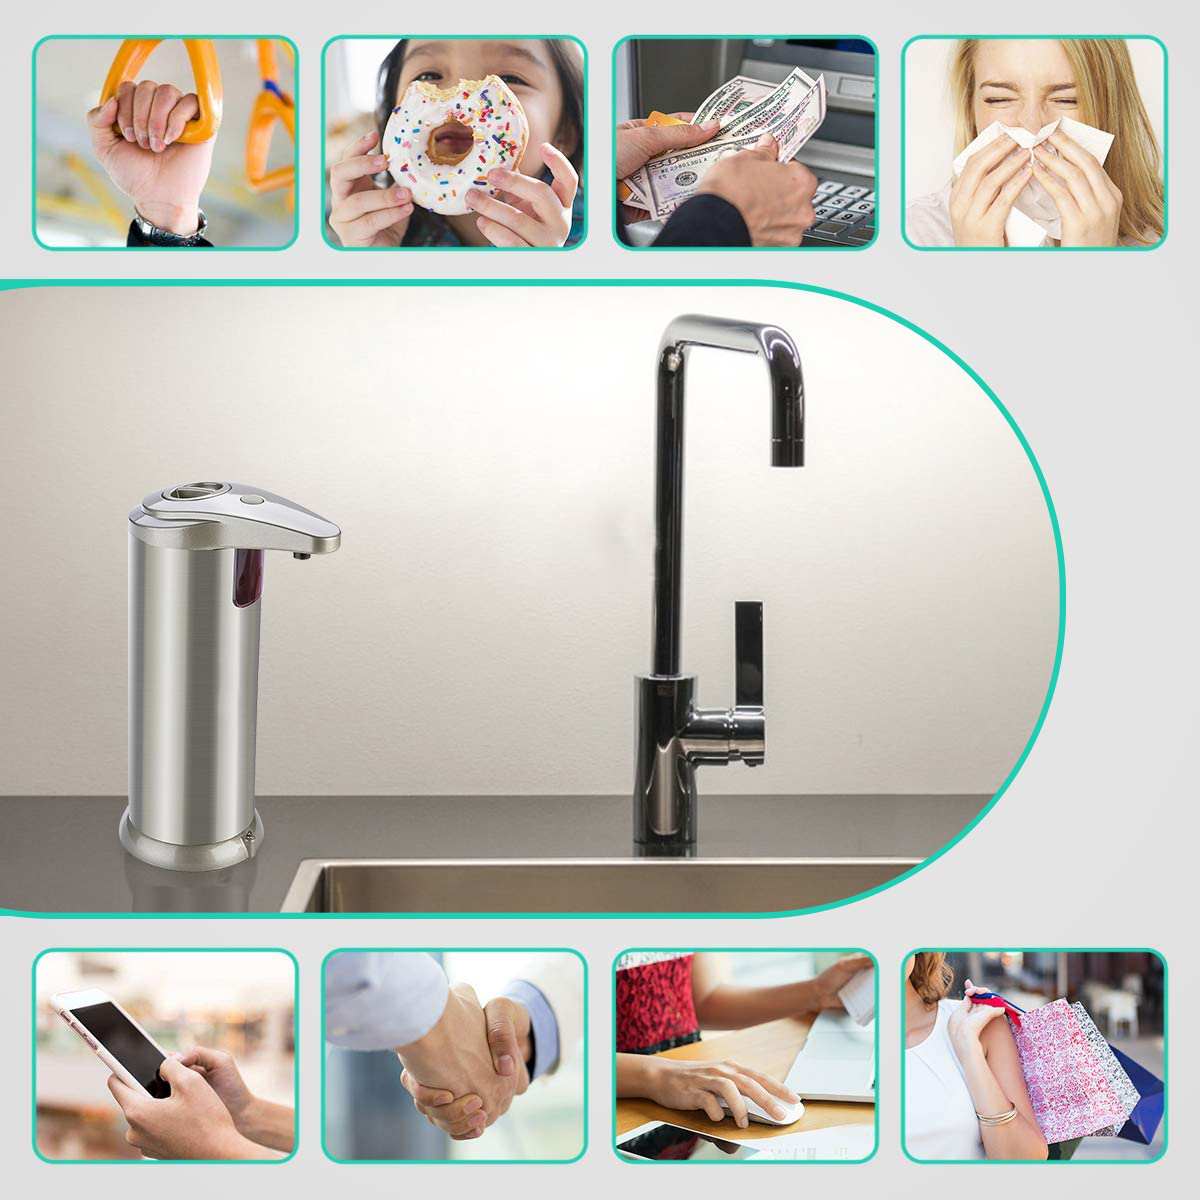 280ml Touchless Liquid Soap Dispenser Stainless Steel Infrared Sensor Automatic Liquid Soap Dispenser for Kitchen Bathroom